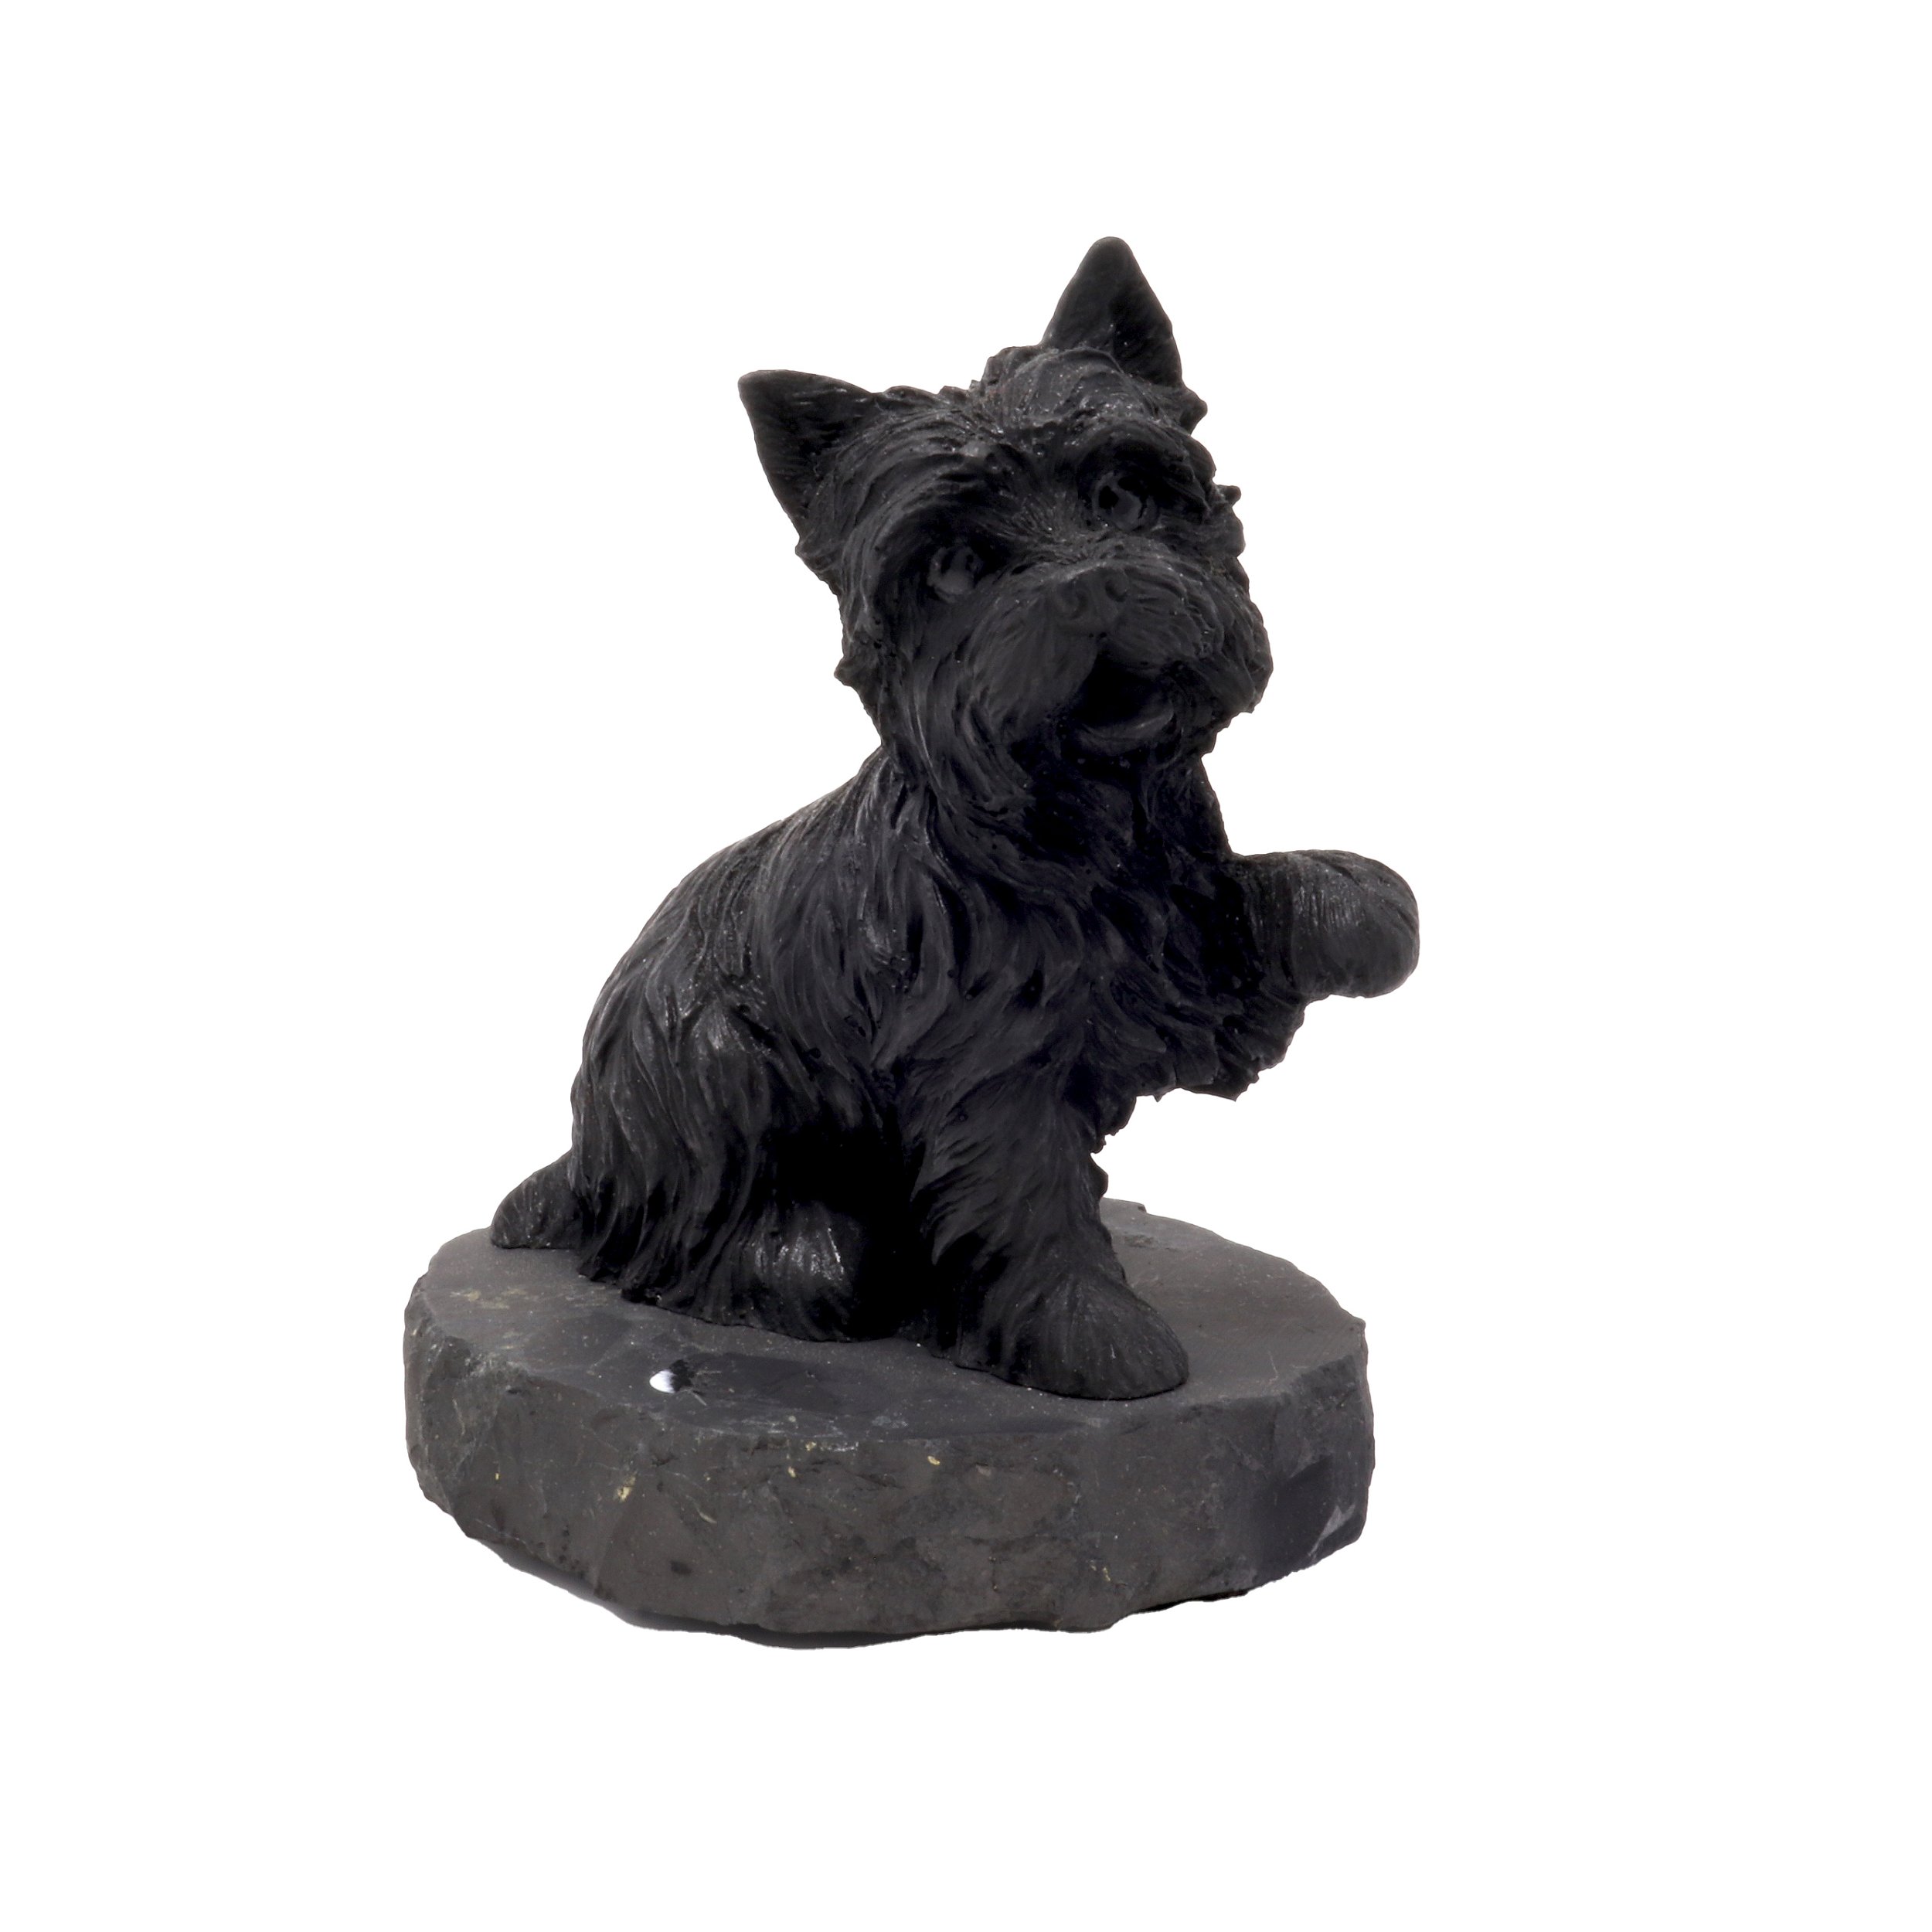 Shungite Dog Figurine - Yorkie